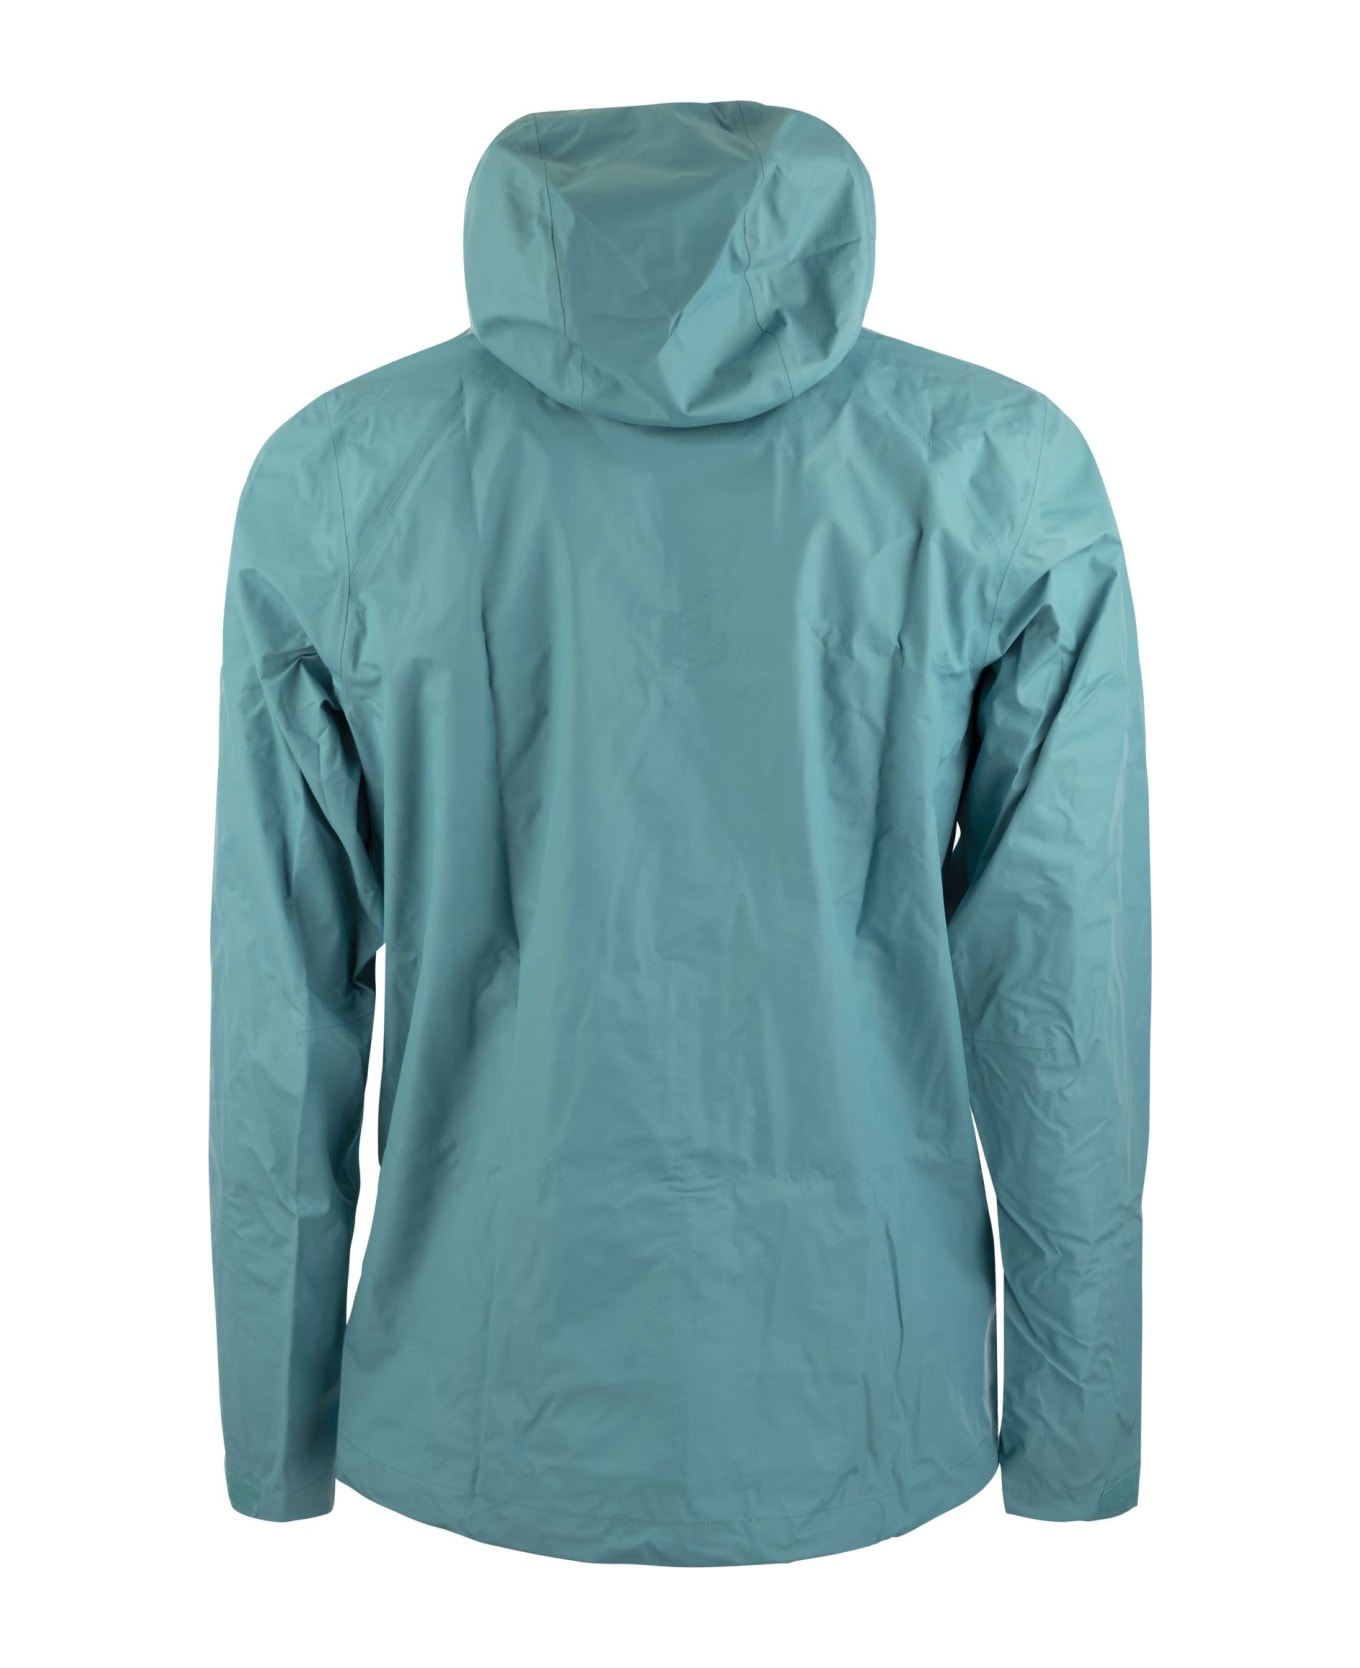 Patagonia Nylon Rainproof Jacket - Light Blue